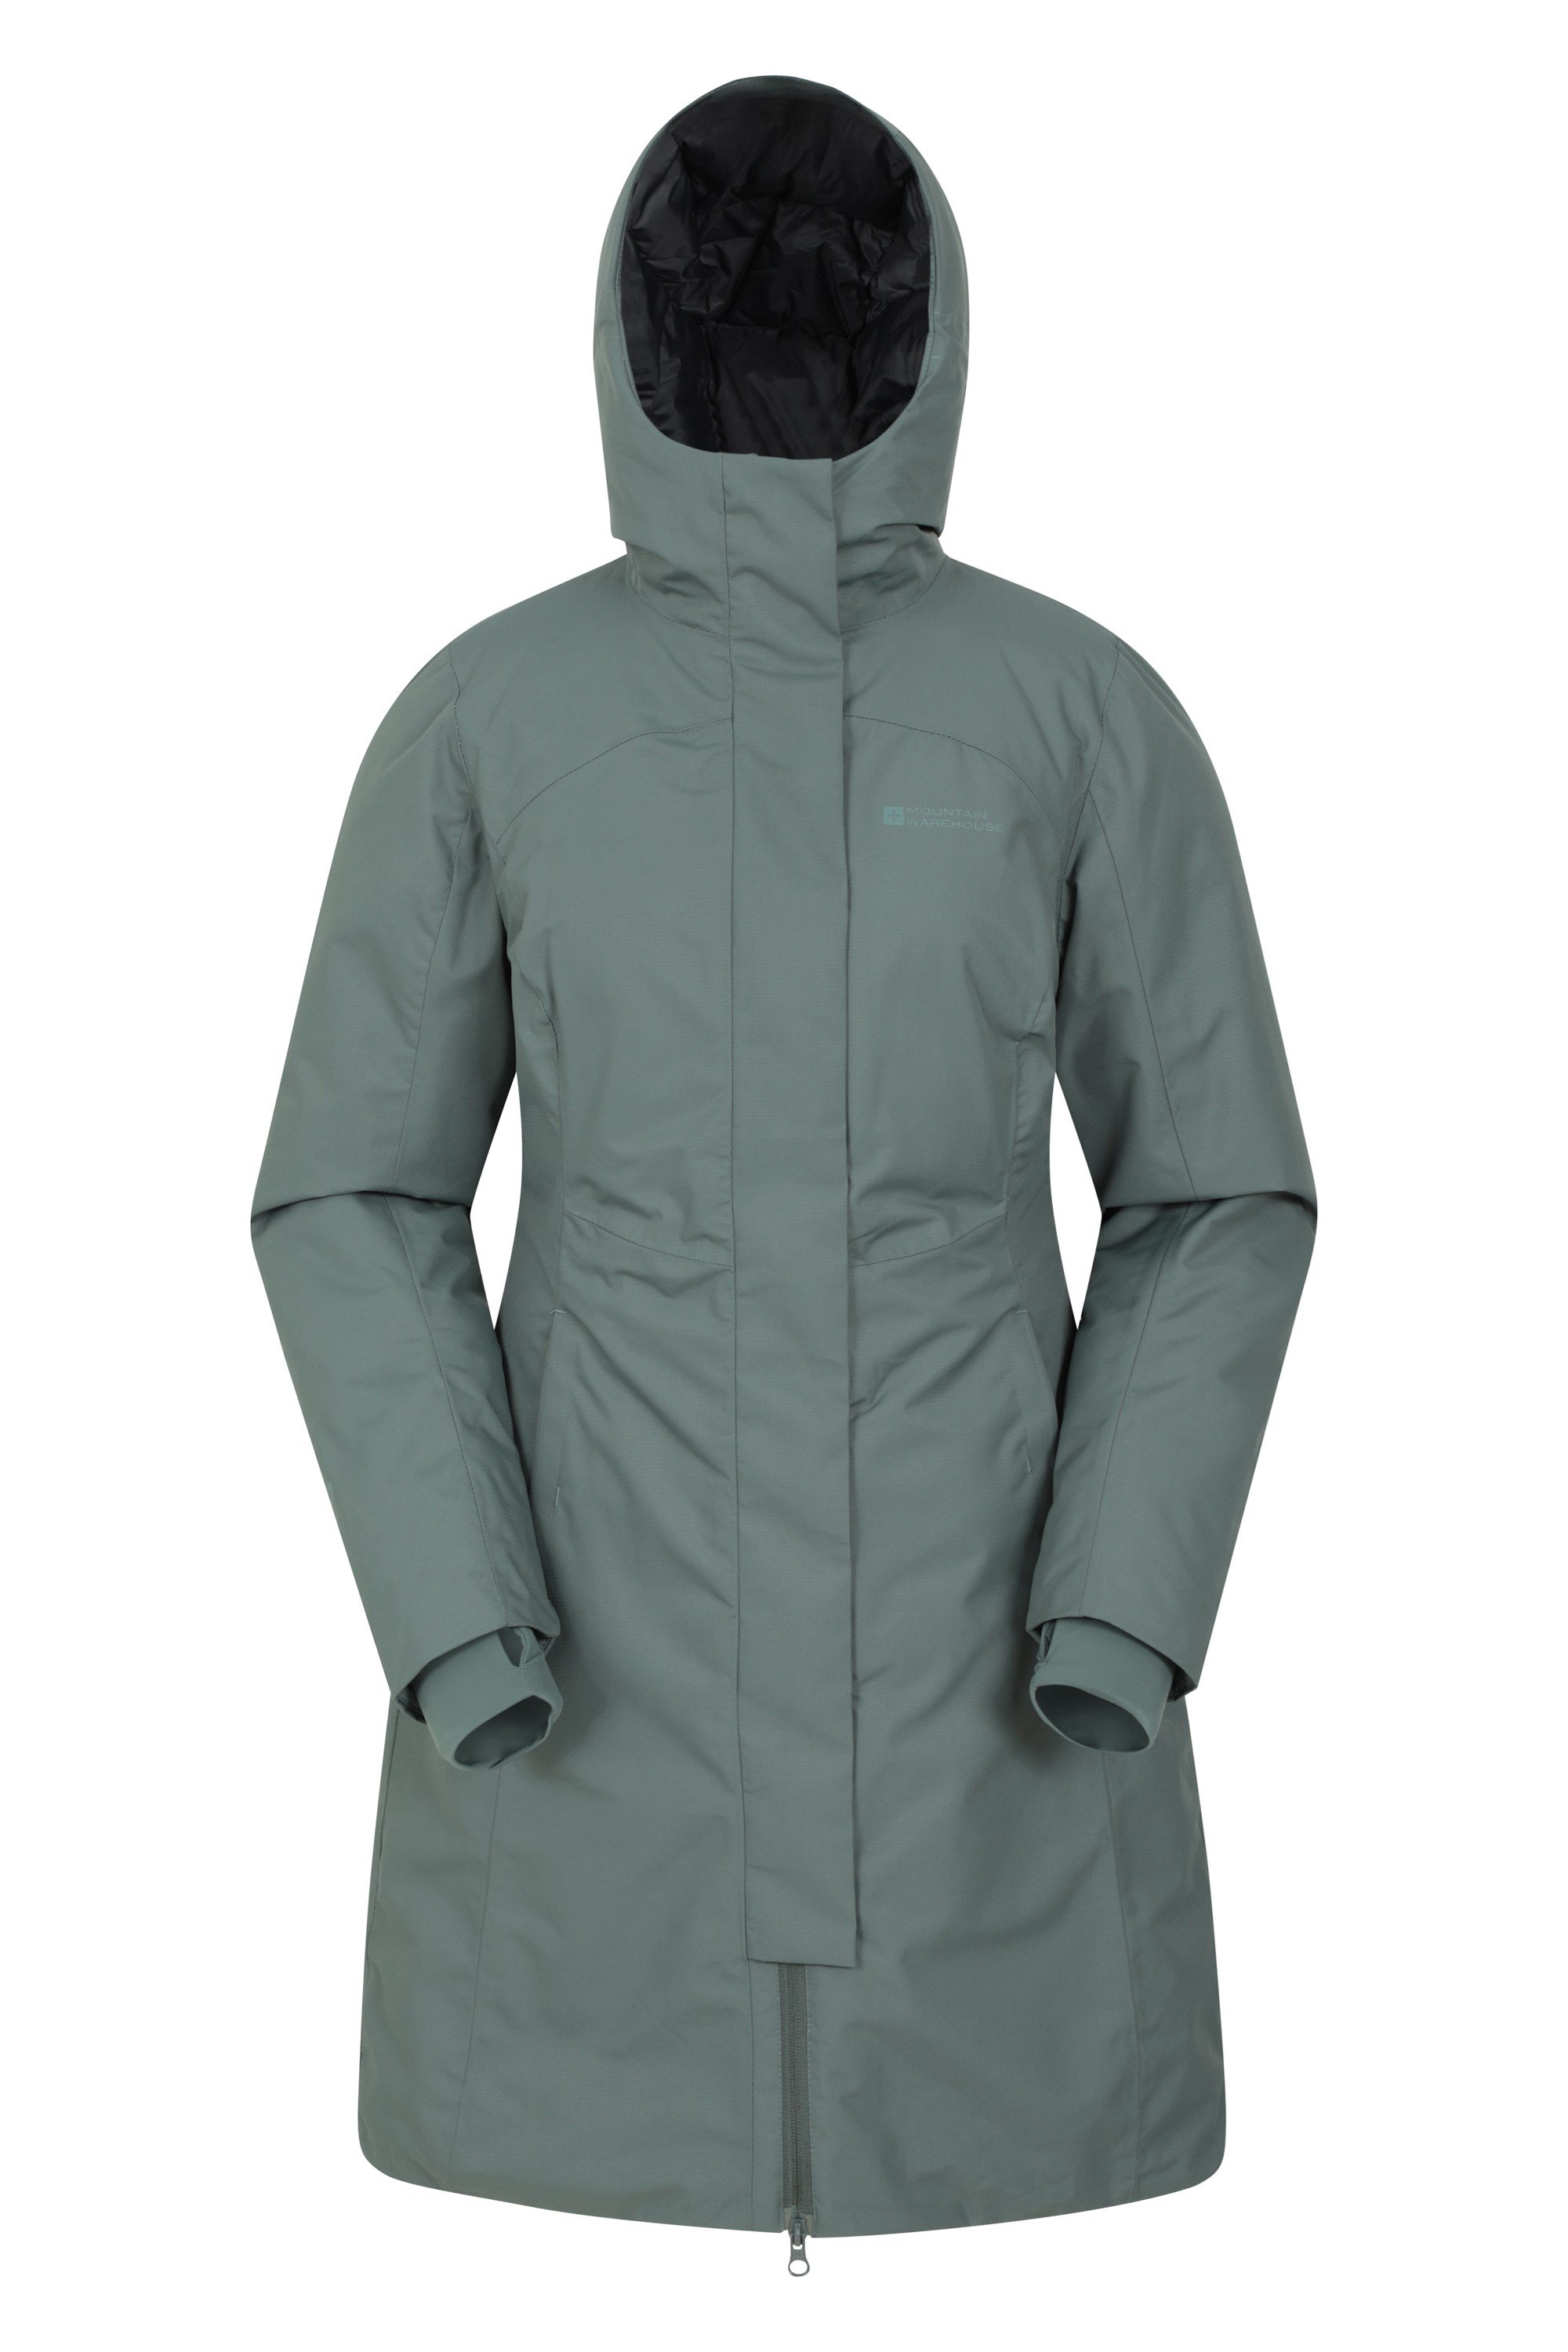 Mountain Warehouse Womens Down Jacket Thermal Water Resistant Ladies Coat 